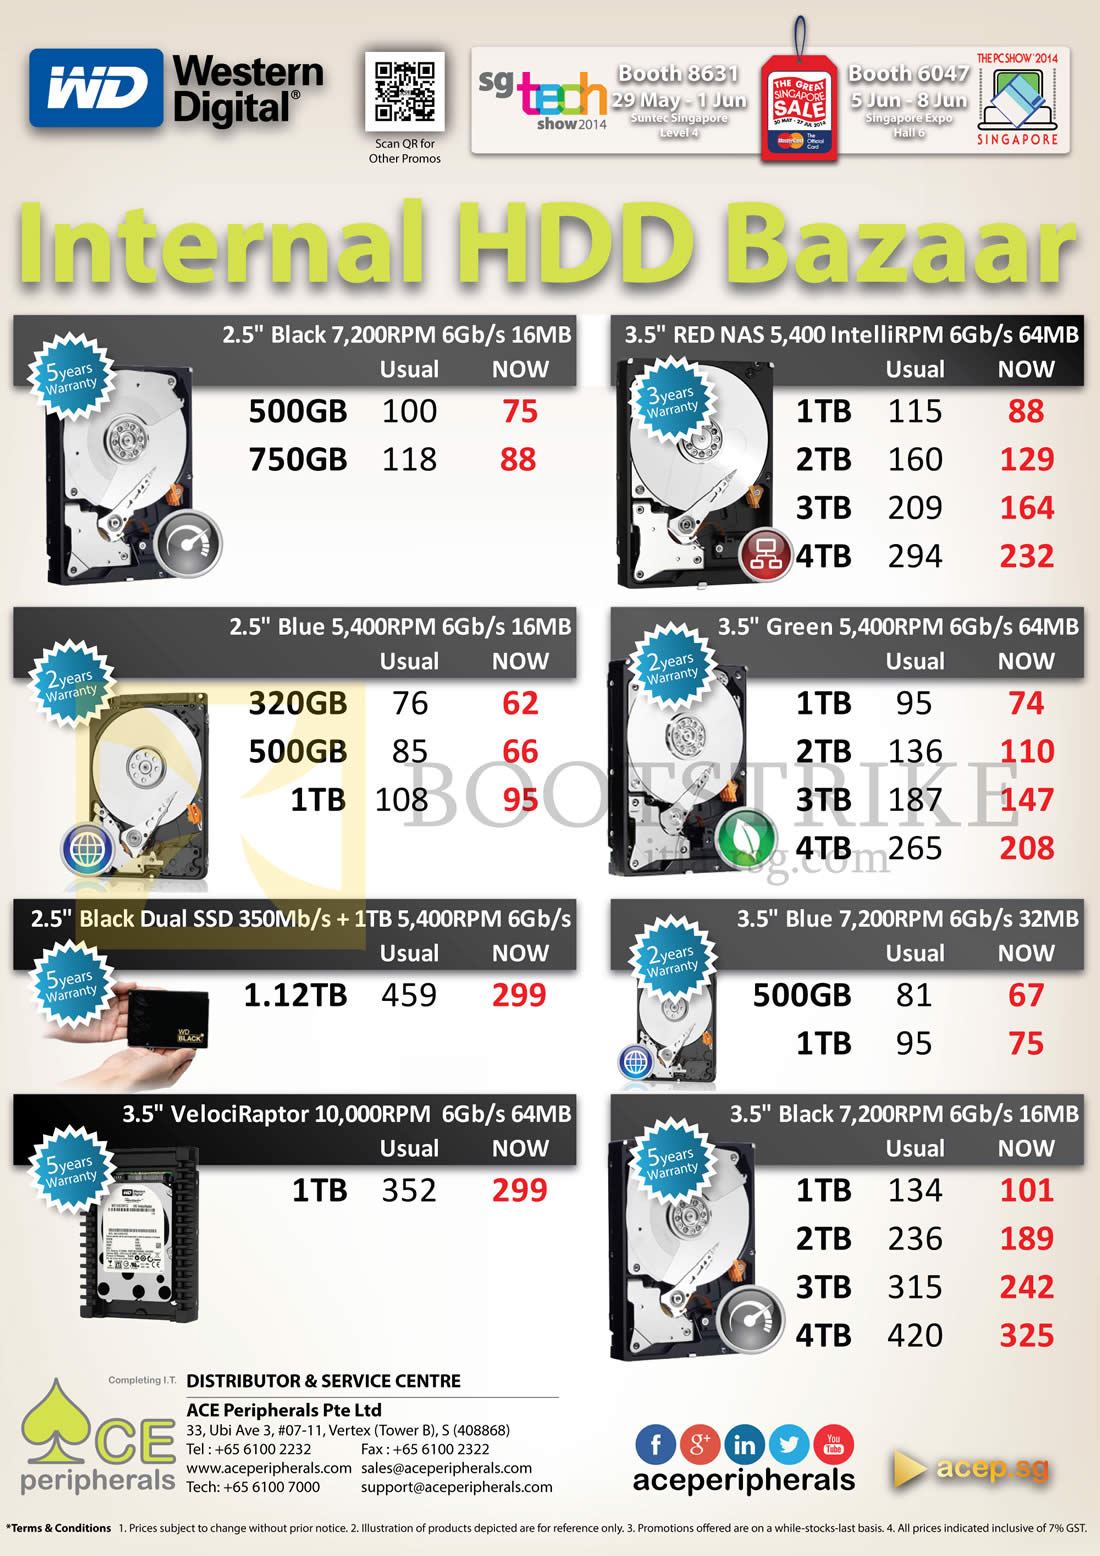 PC SHOW 2014 price list image brochure of ACE Peripherals Western Digital Internal HDD Bazaar